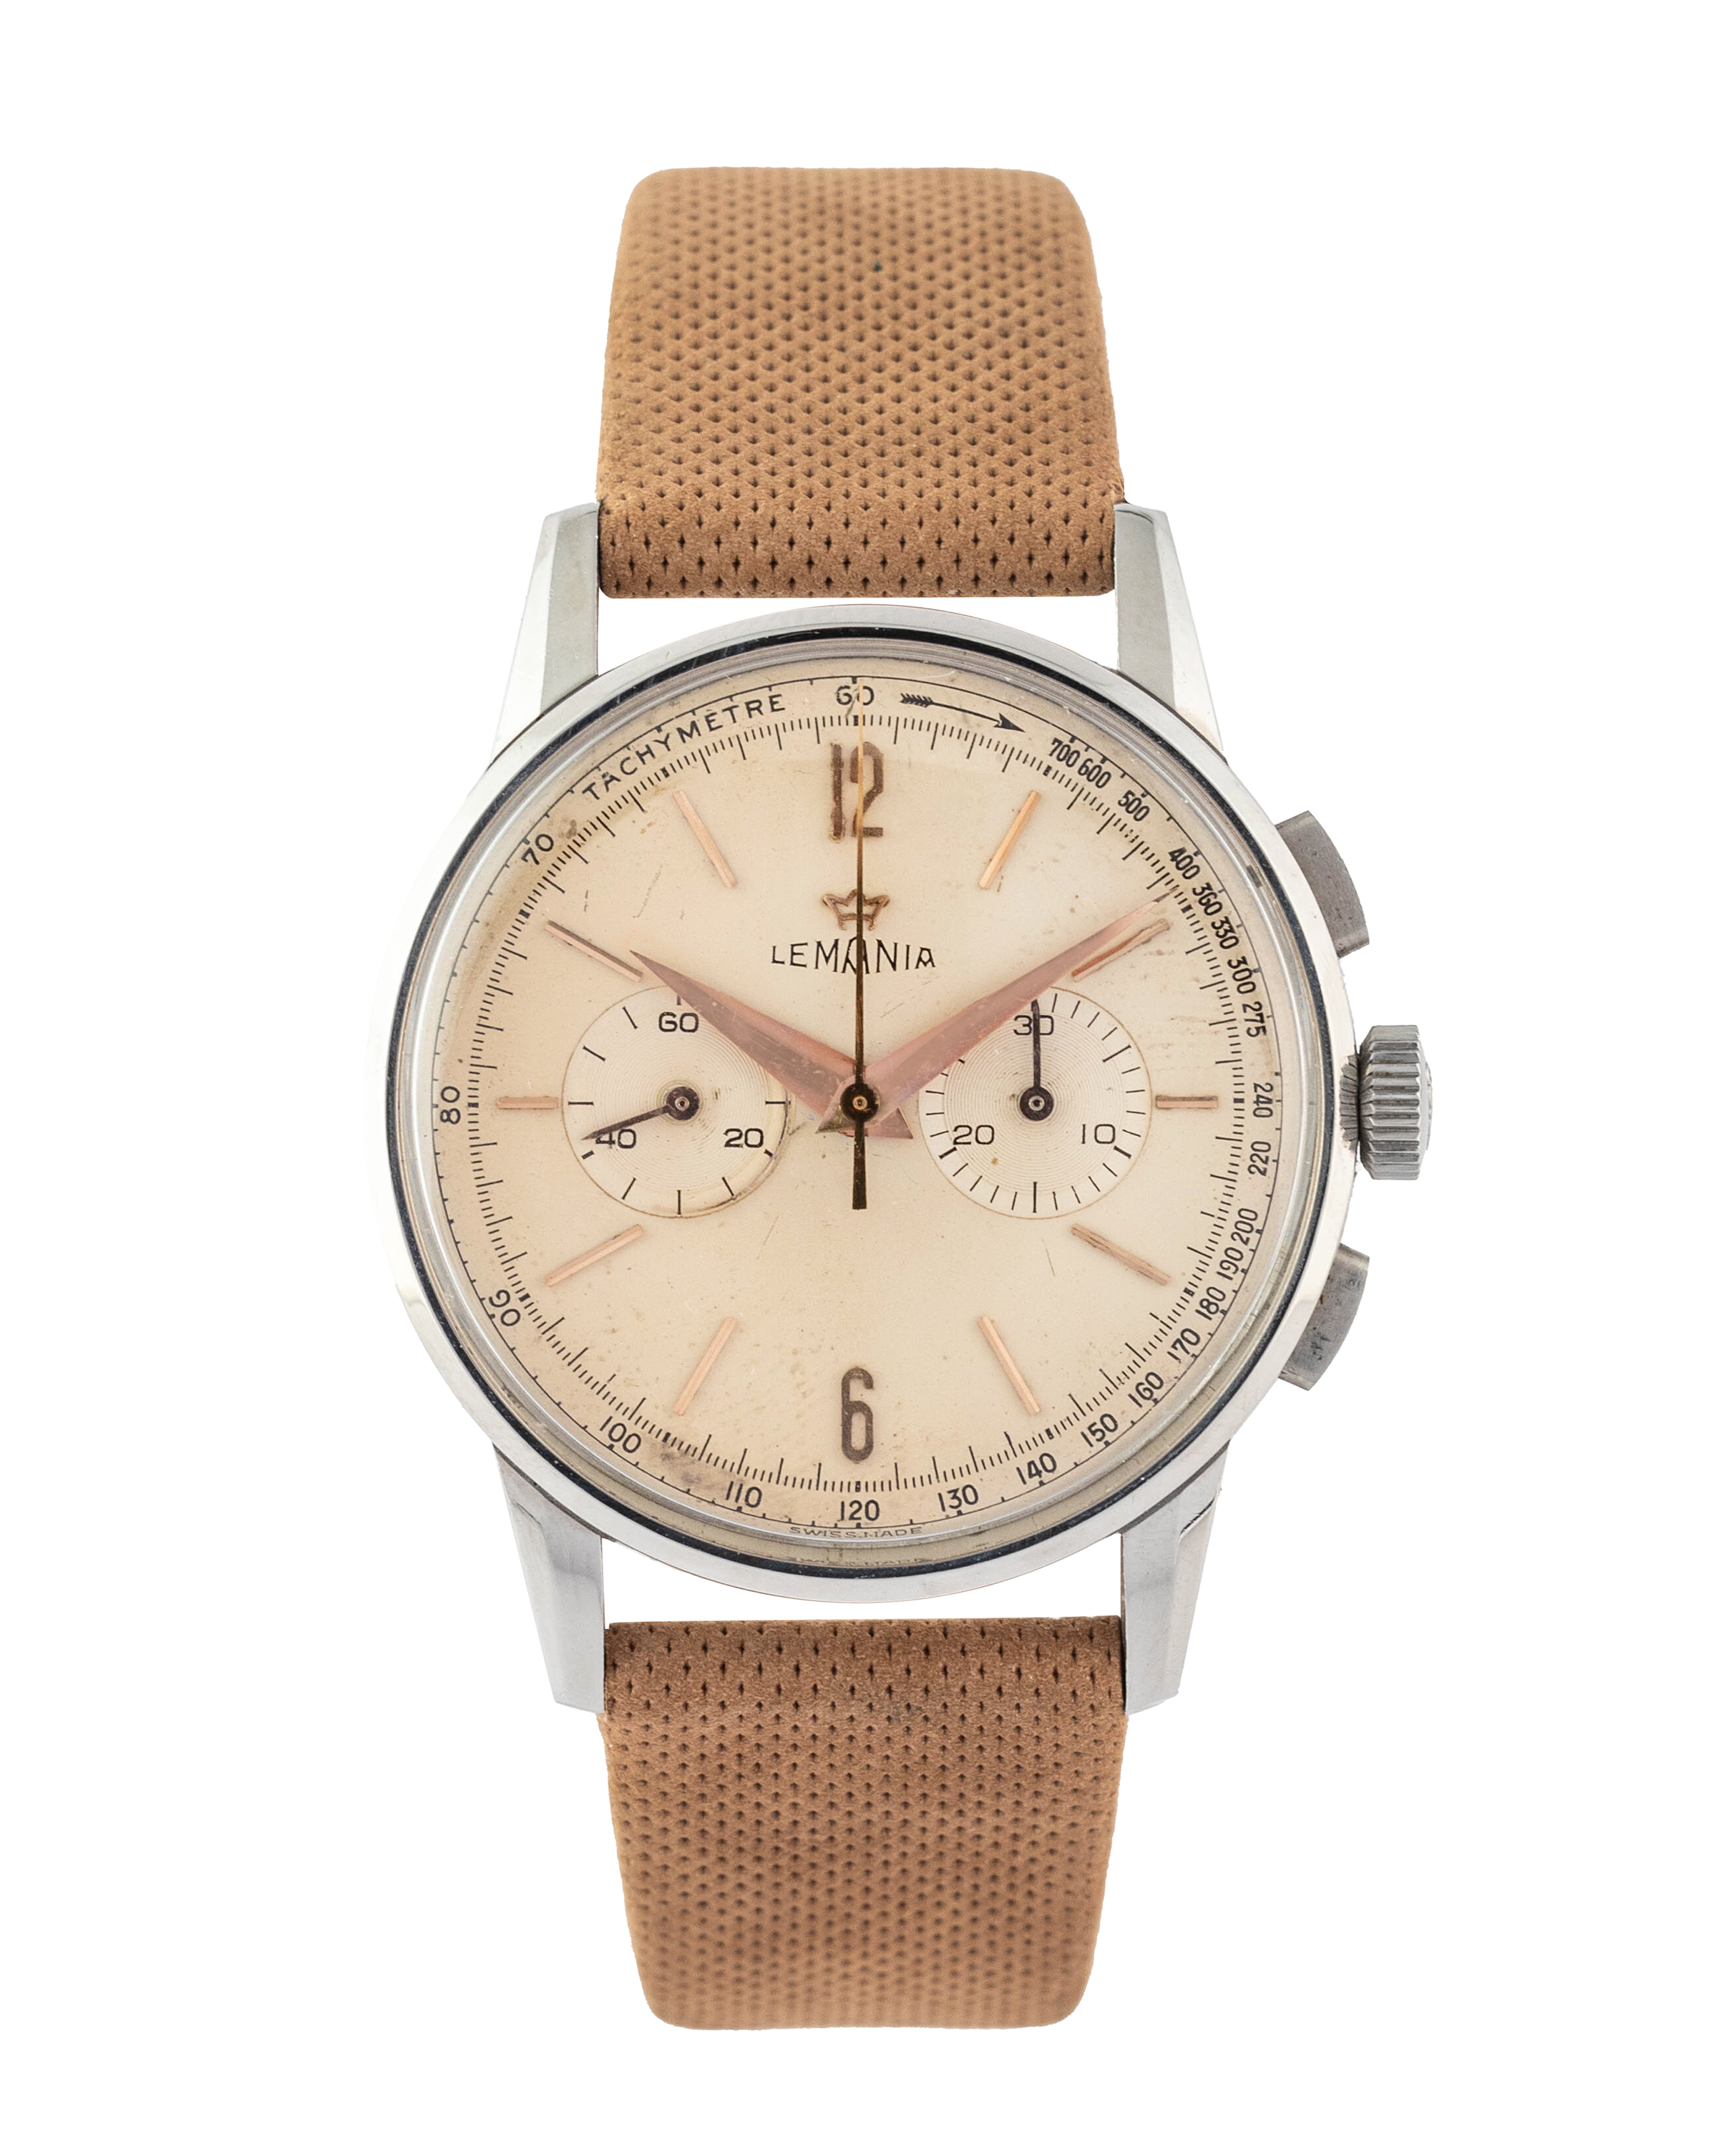 Lemania Chronograph "Mustard dial" wrist watch